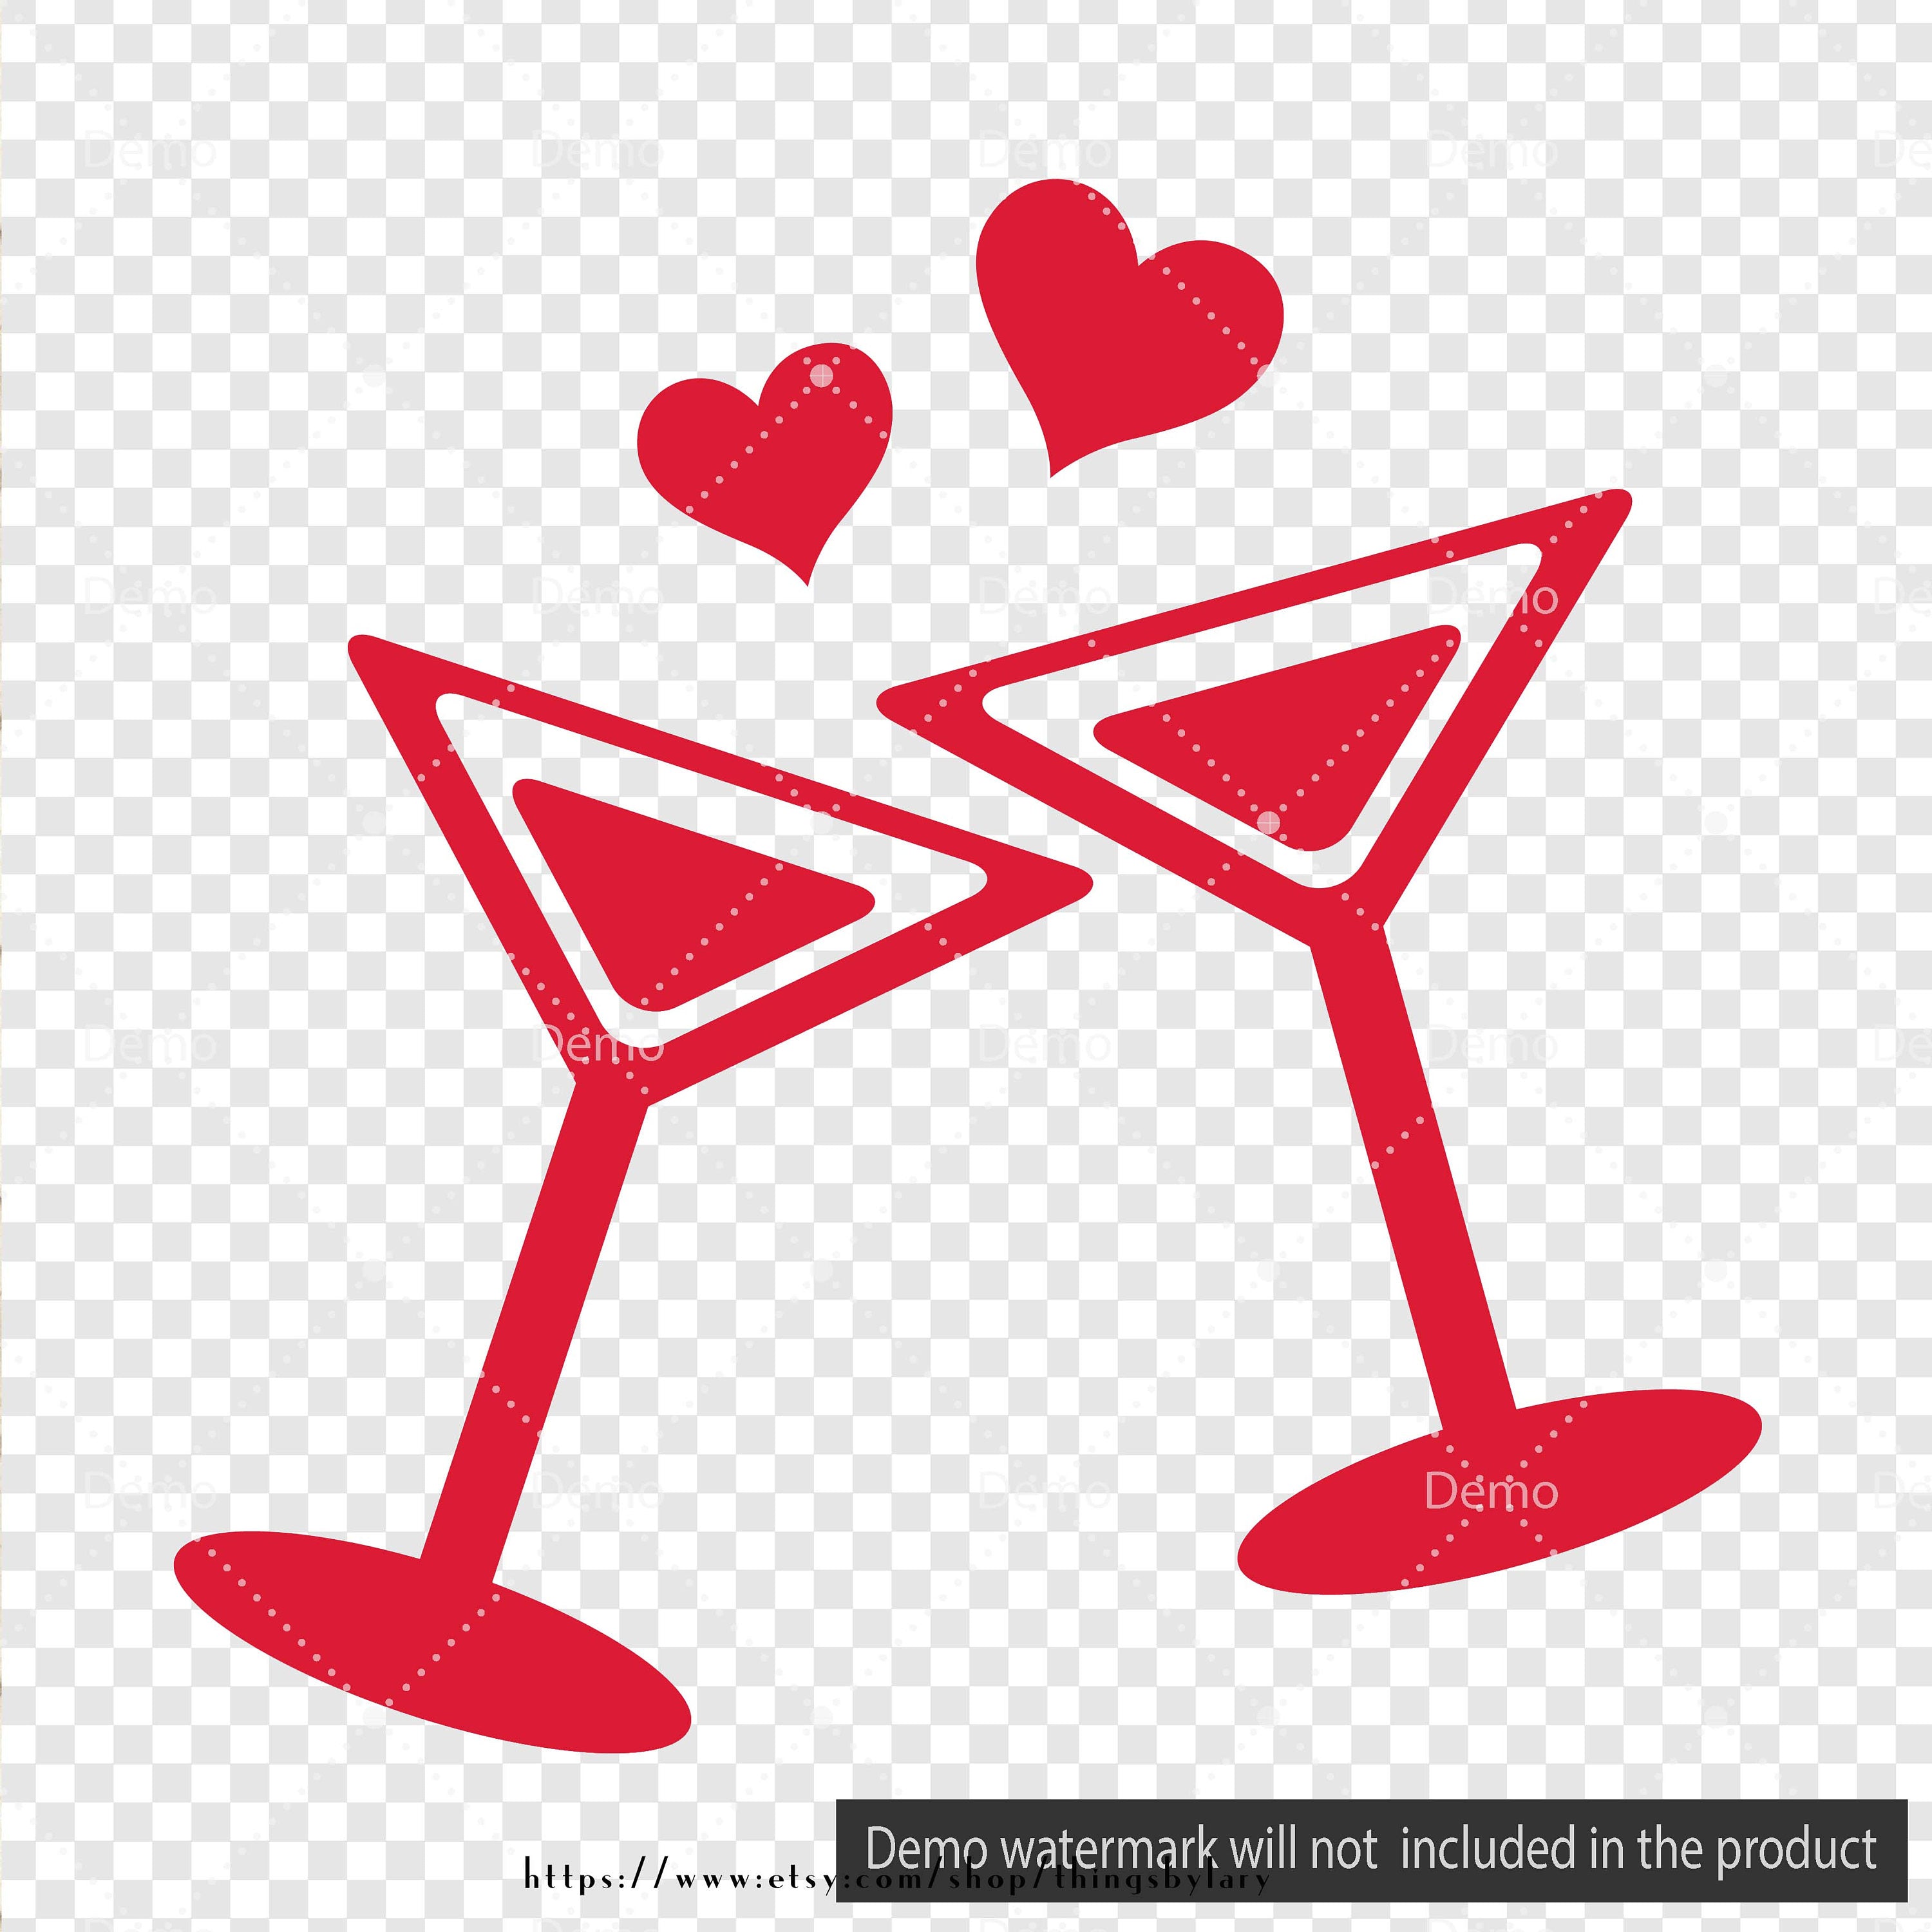 Love Cocktail Clipart, Love Clip art, Valentine Clipart, 100 PNG Clipart, Planner Clipart, Instant Download Clipart, 100 Wedding Clipart